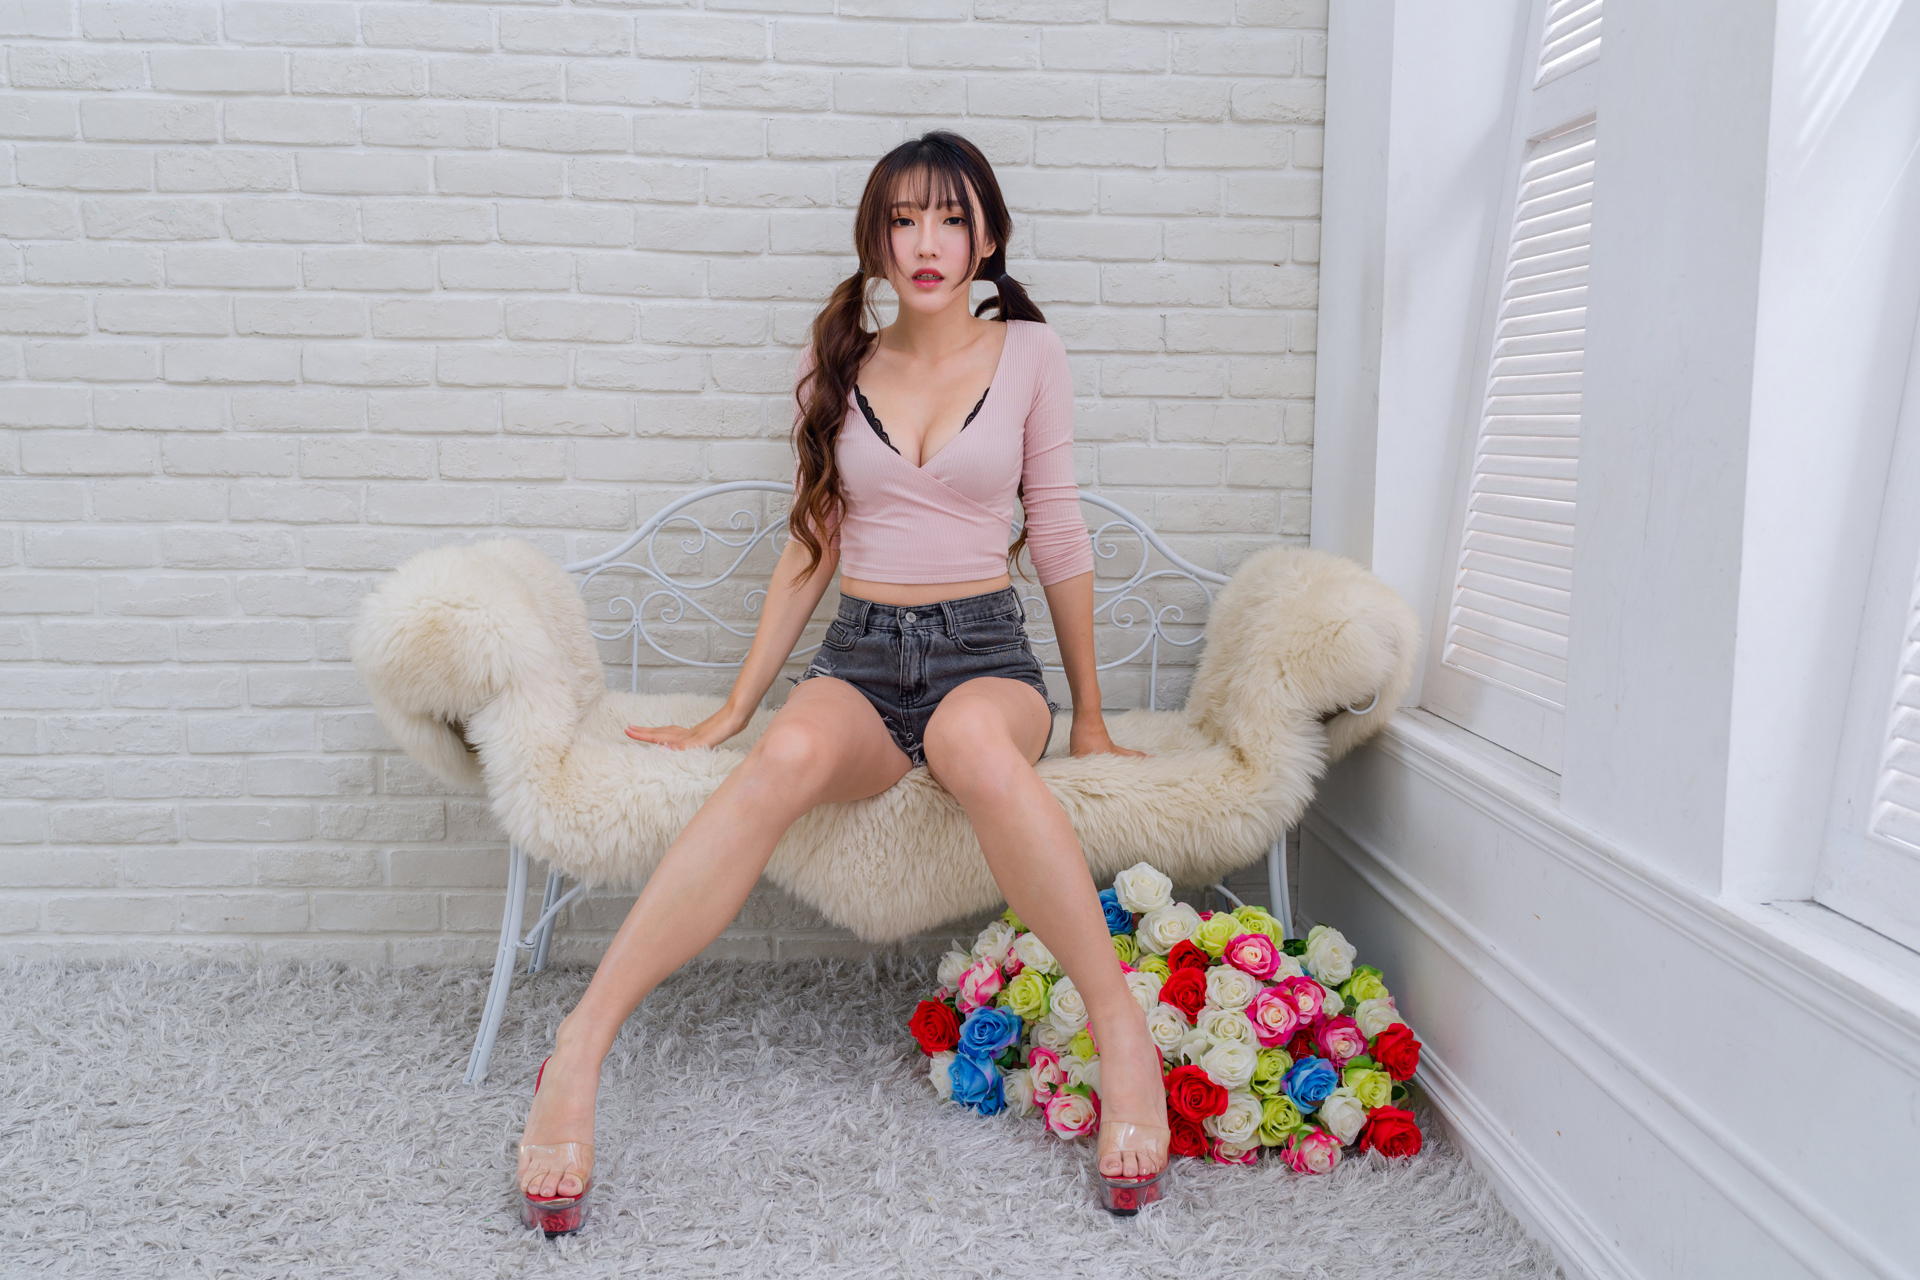 Asian Model Women Long Hair Dark Hair Platform Shoes Barefoot Shorts Carpet Pink Tops Bench Window T 1920x1280